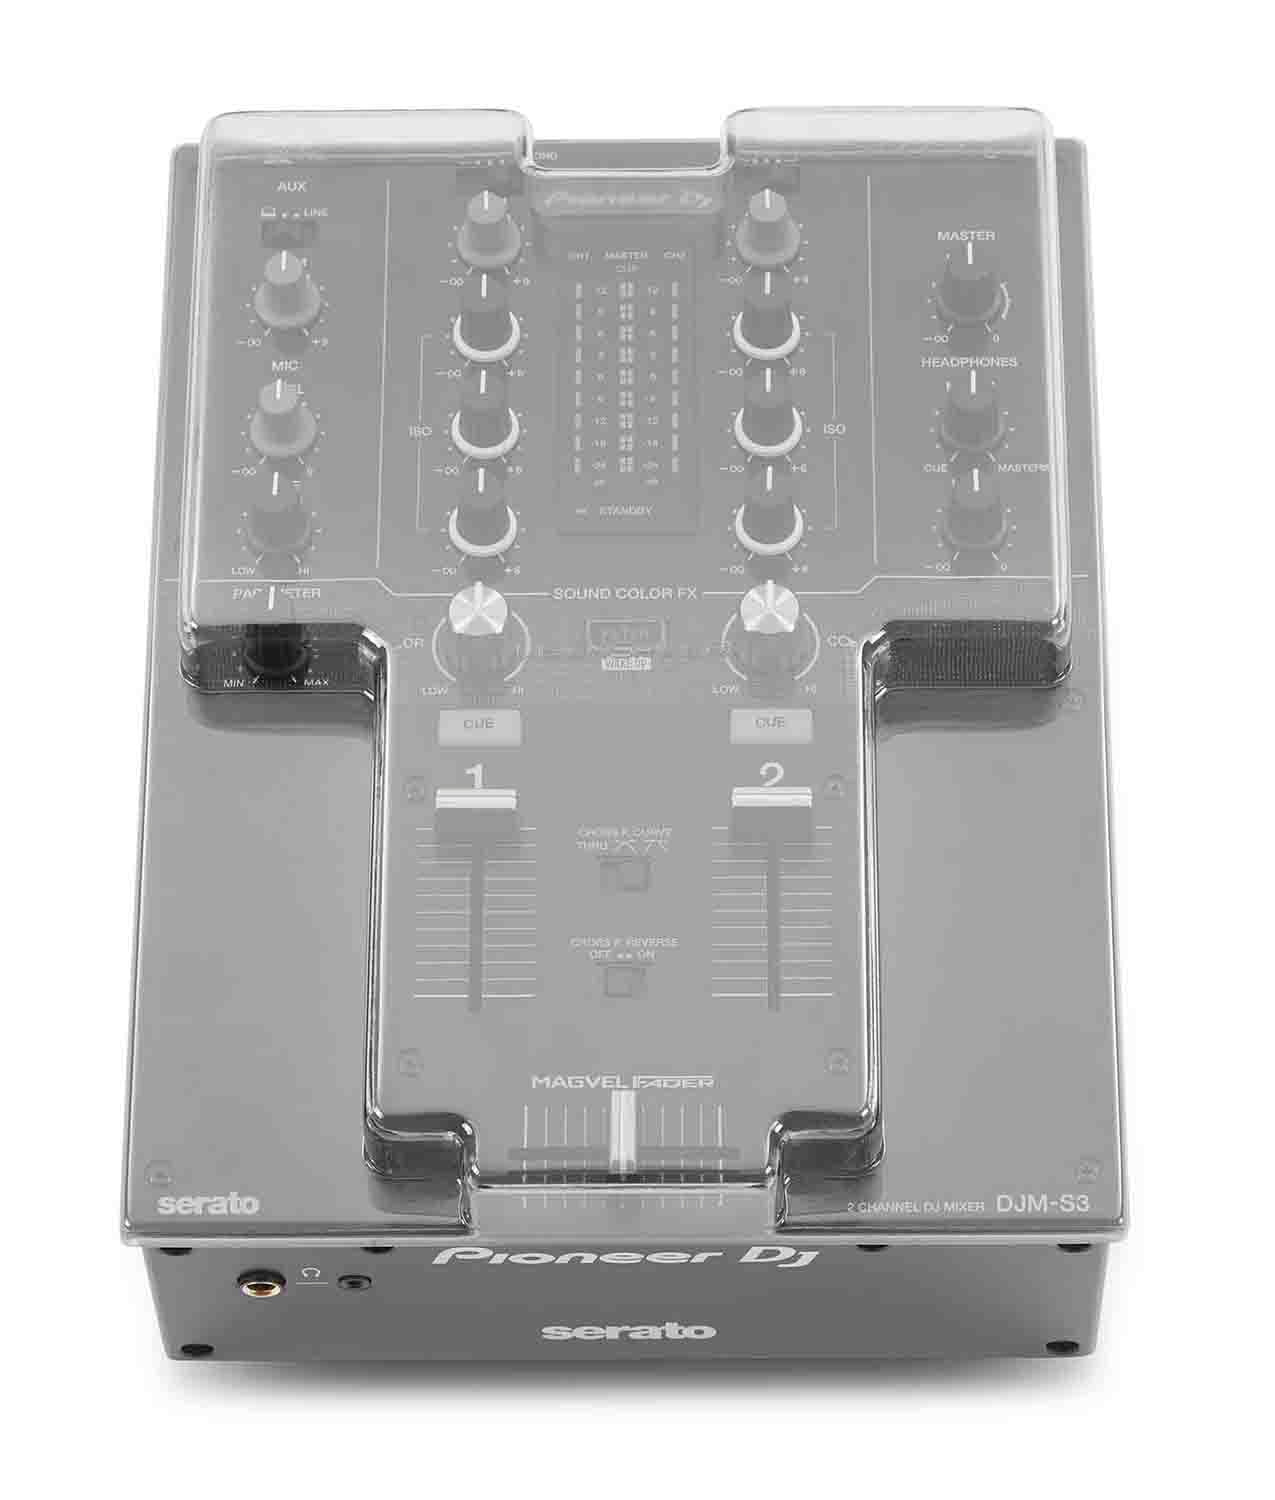 Decksaver Cover DS-PC-DJMS3 For Pioneer DJM-S3 DJ Mixer - Hollywood DJ